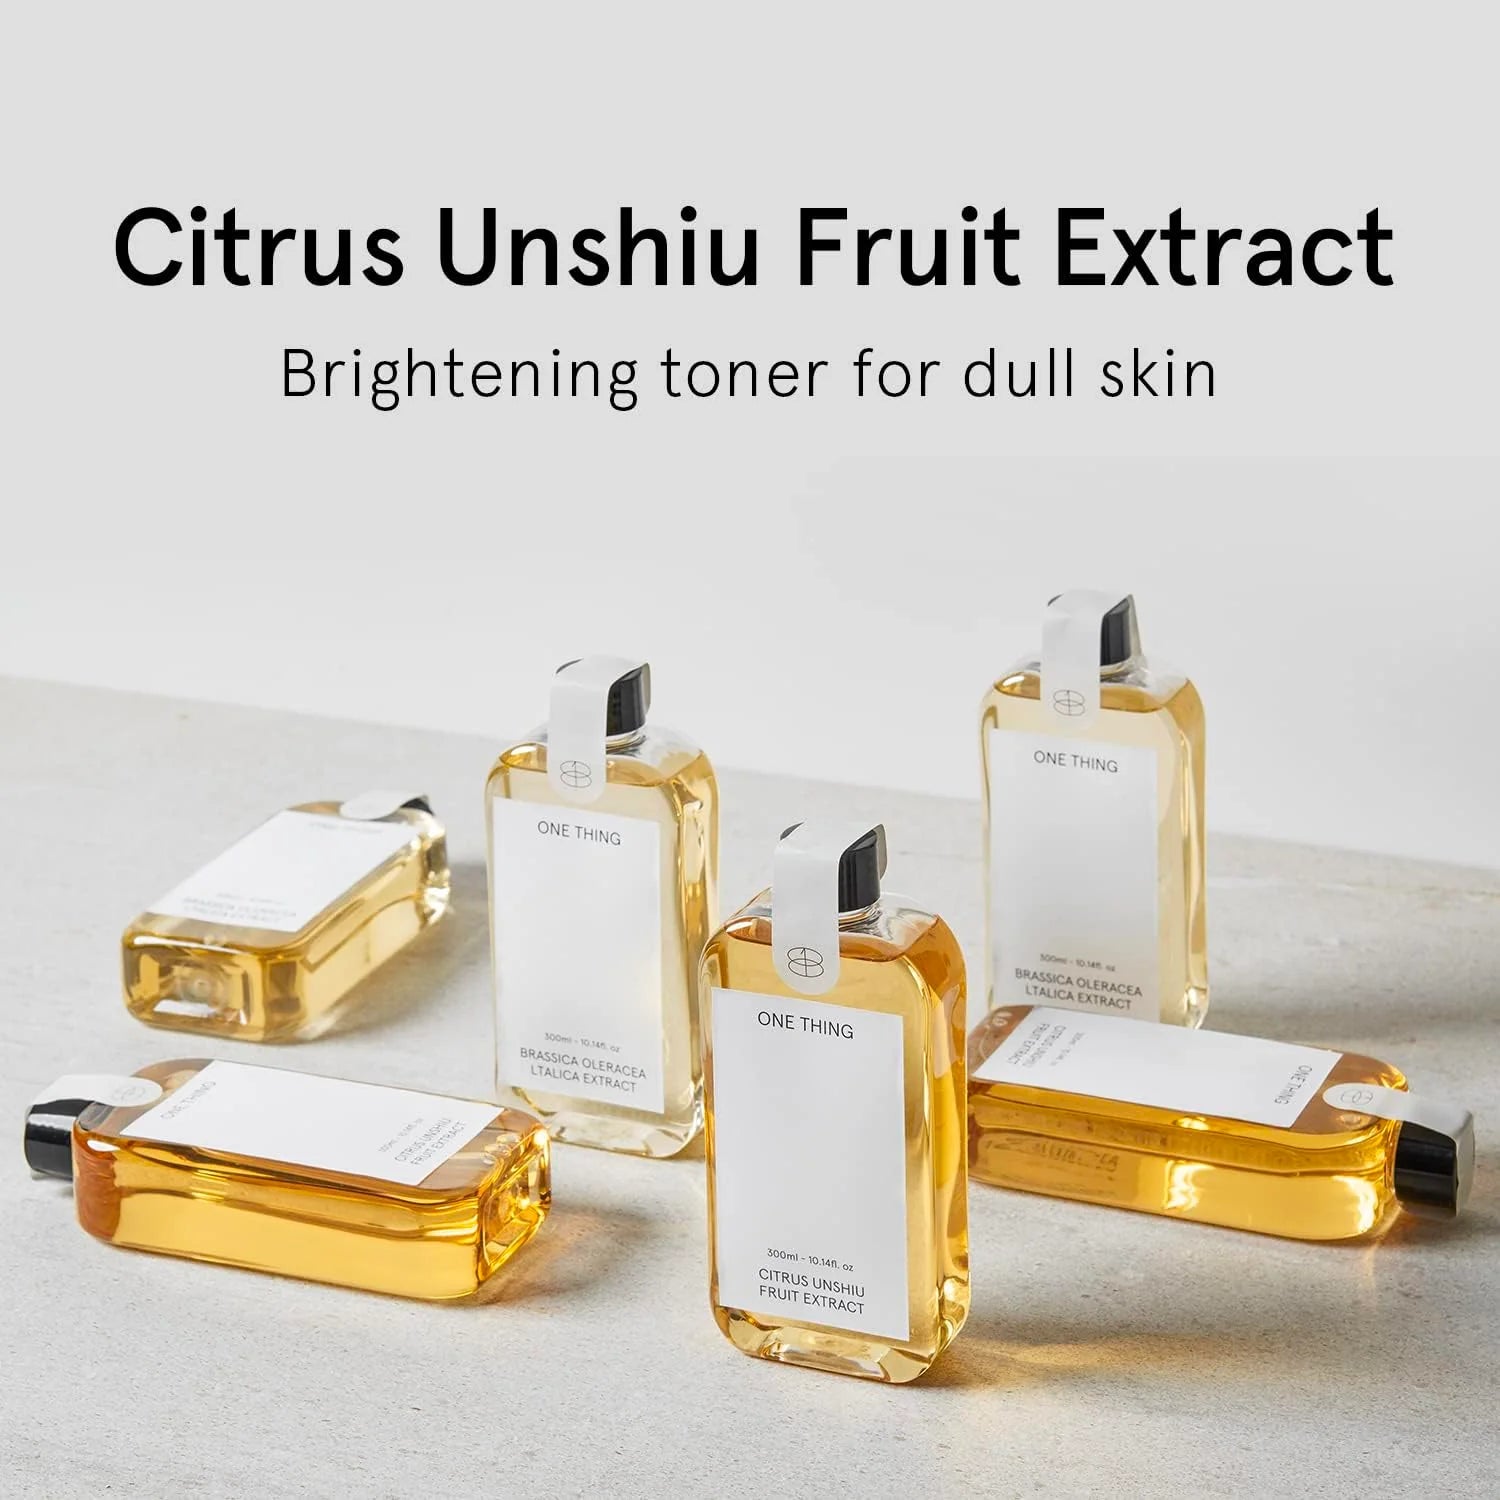 ONE THING Citrus Unshiu Fruit Extract 150ml